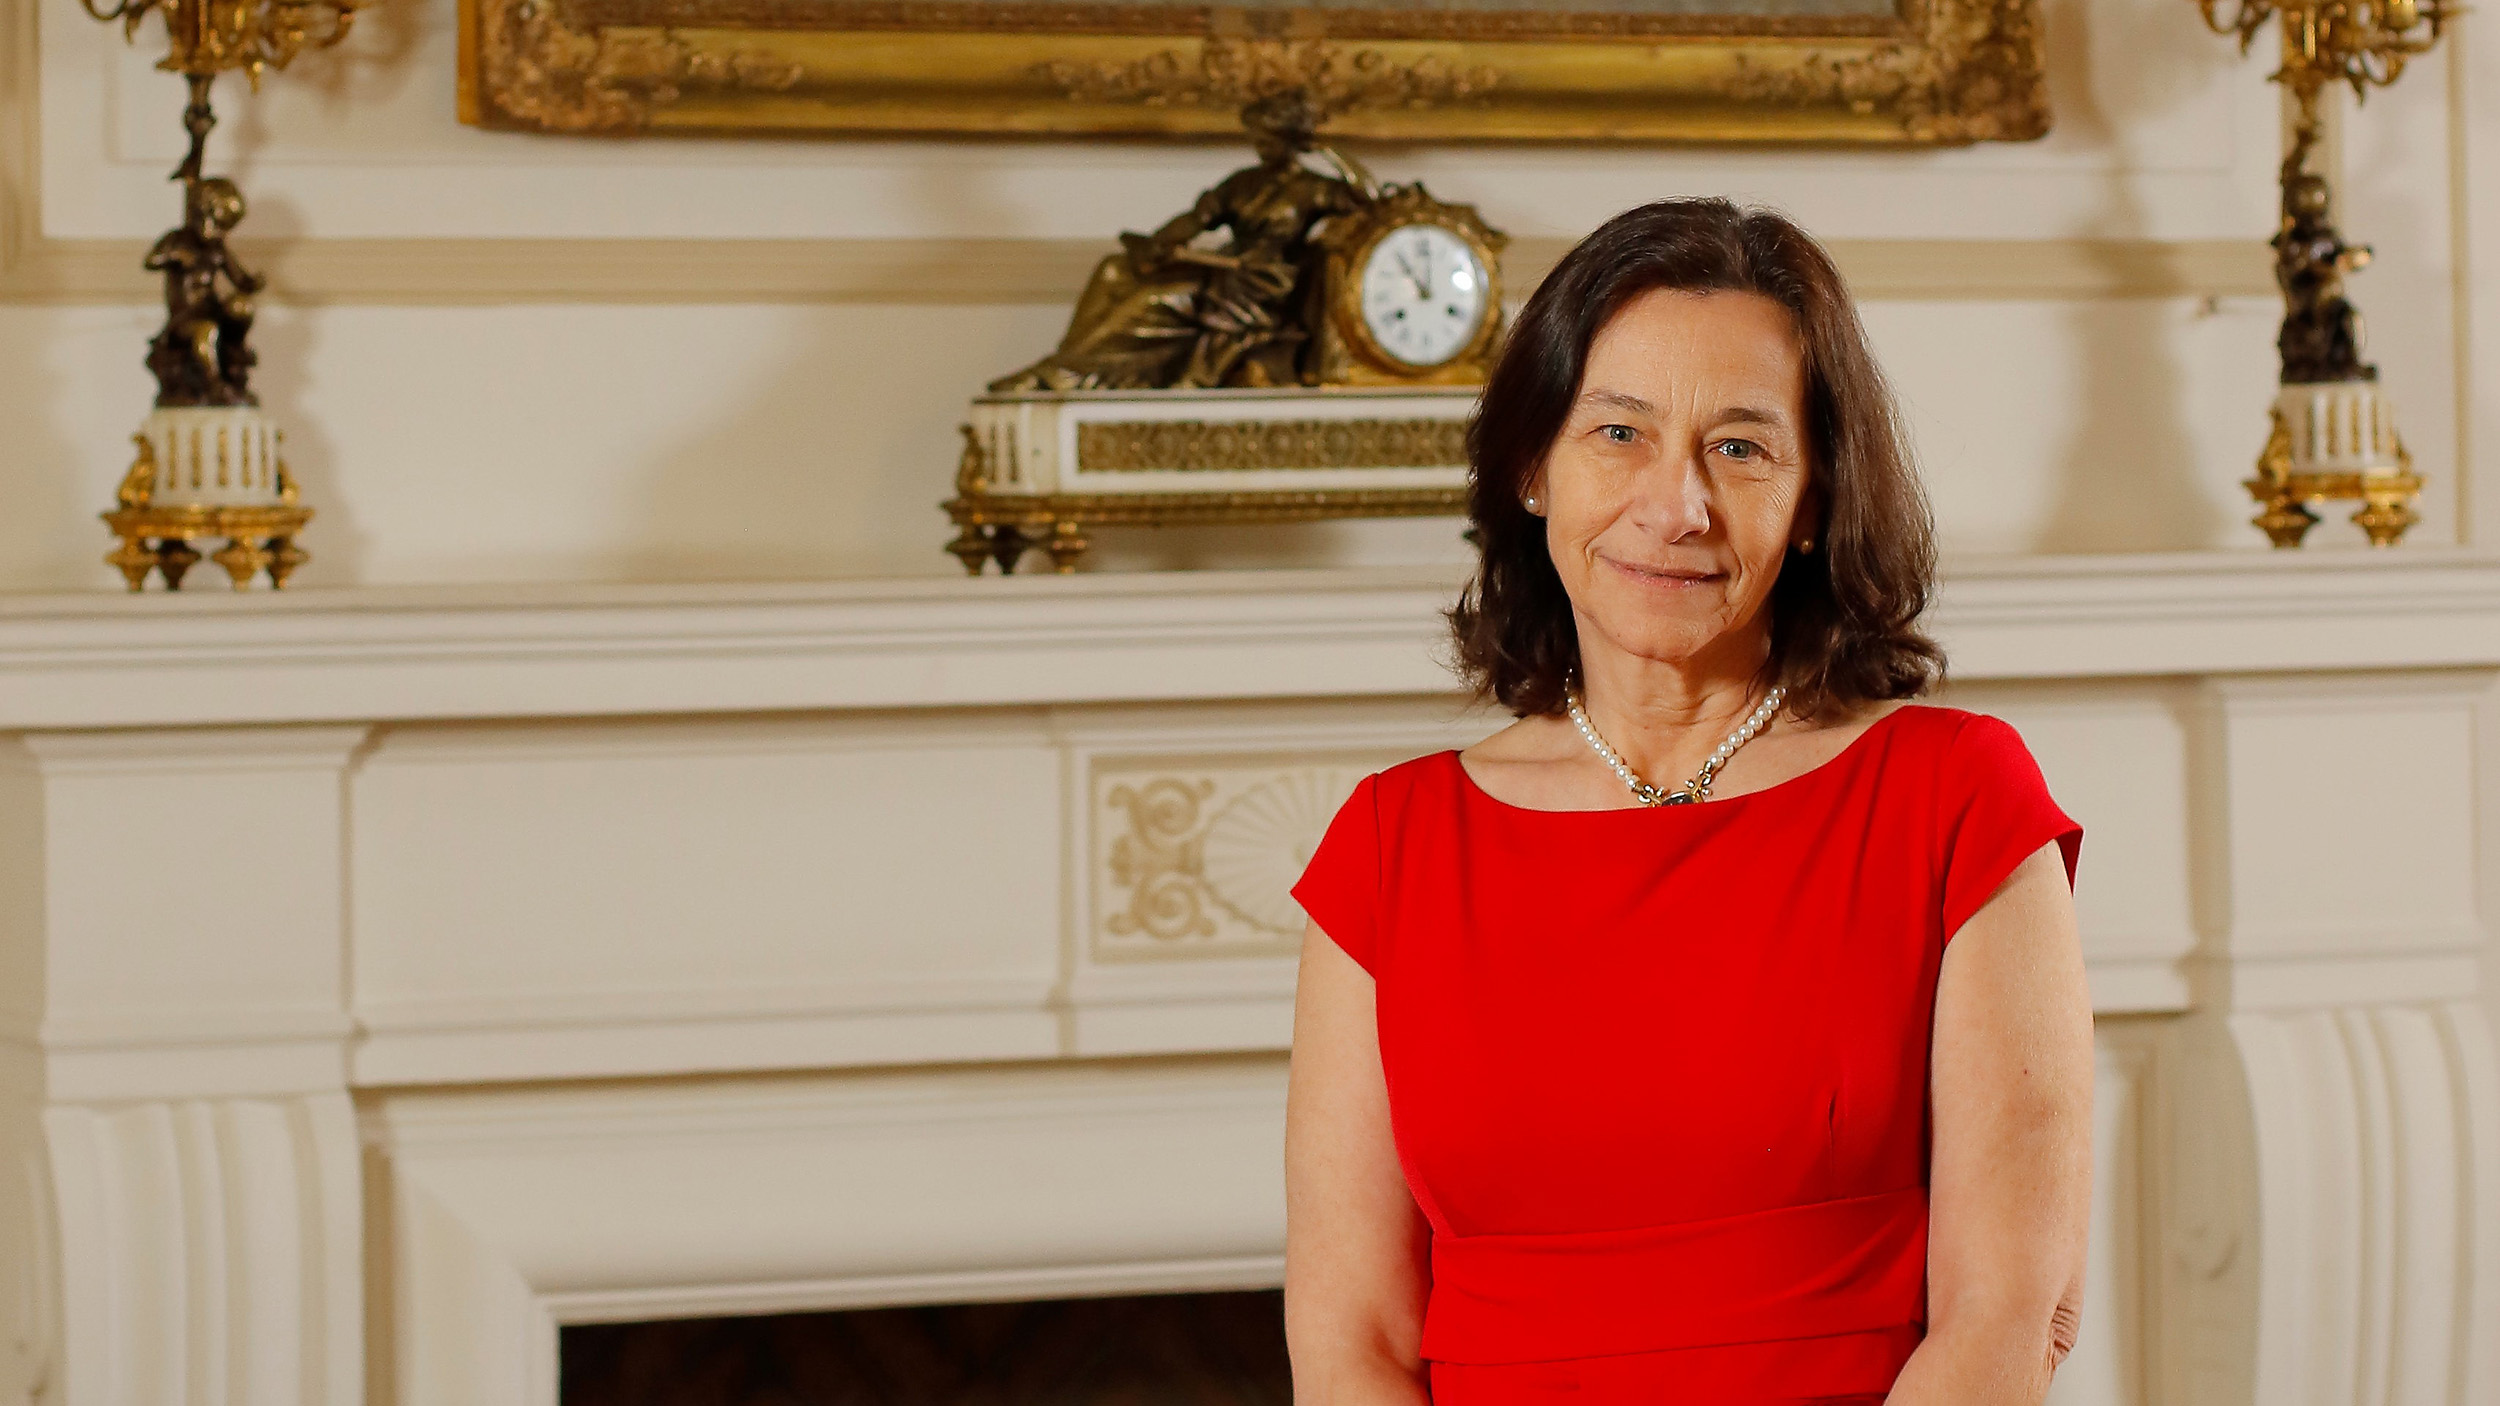 Histórico: Rosanna Costa será la primera mujer presidenta del Banco Central de Chile